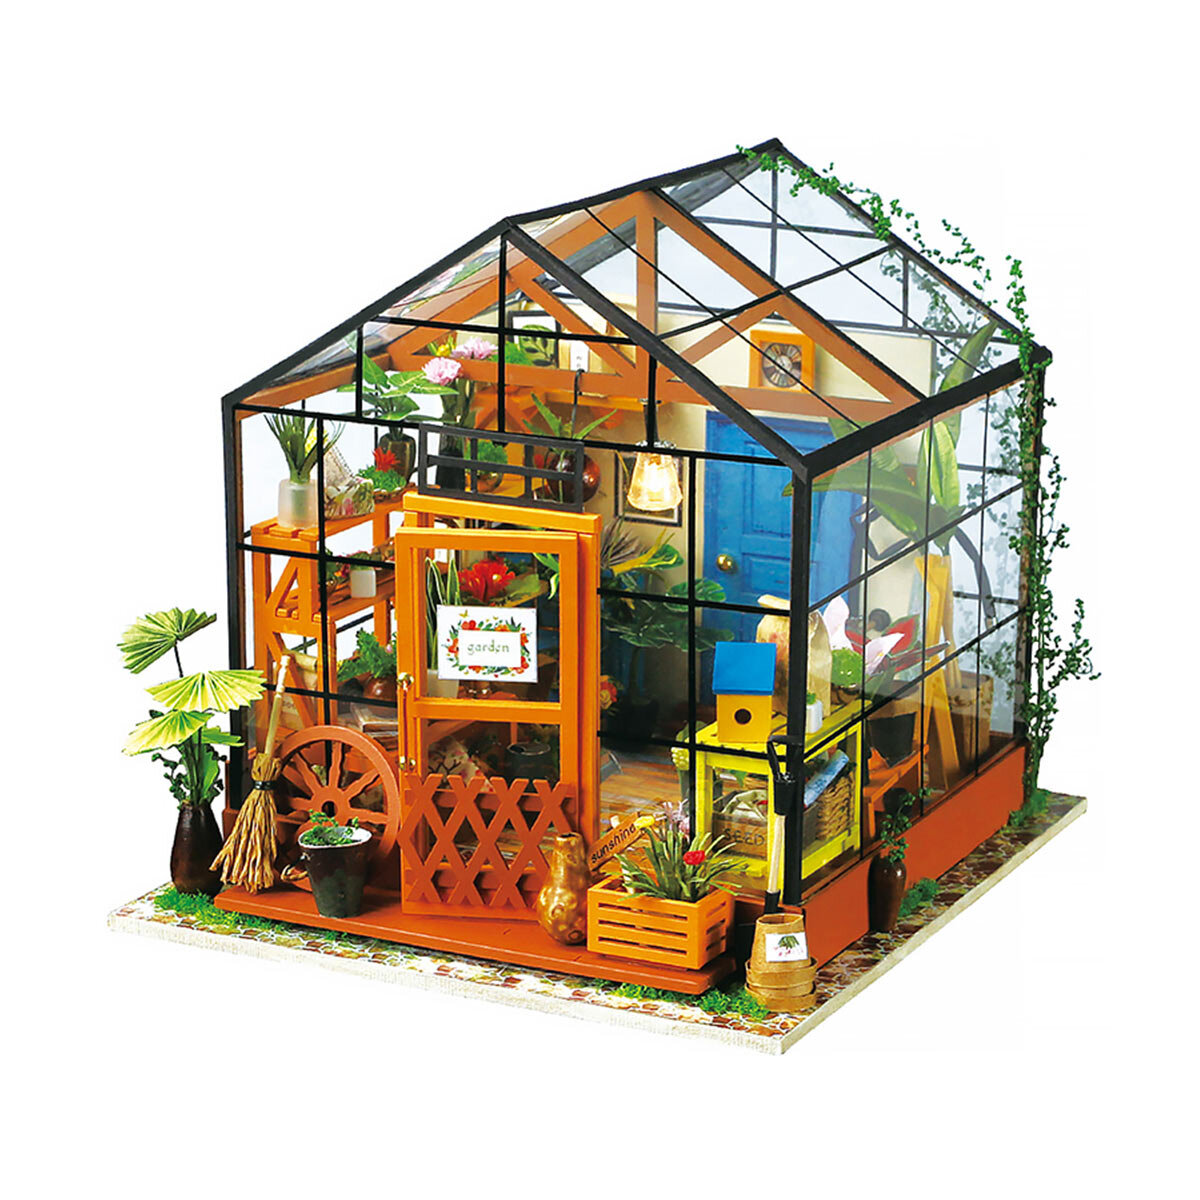 Casa en miniatura - Invernadero de la Sra. Cathy Rolife DG104